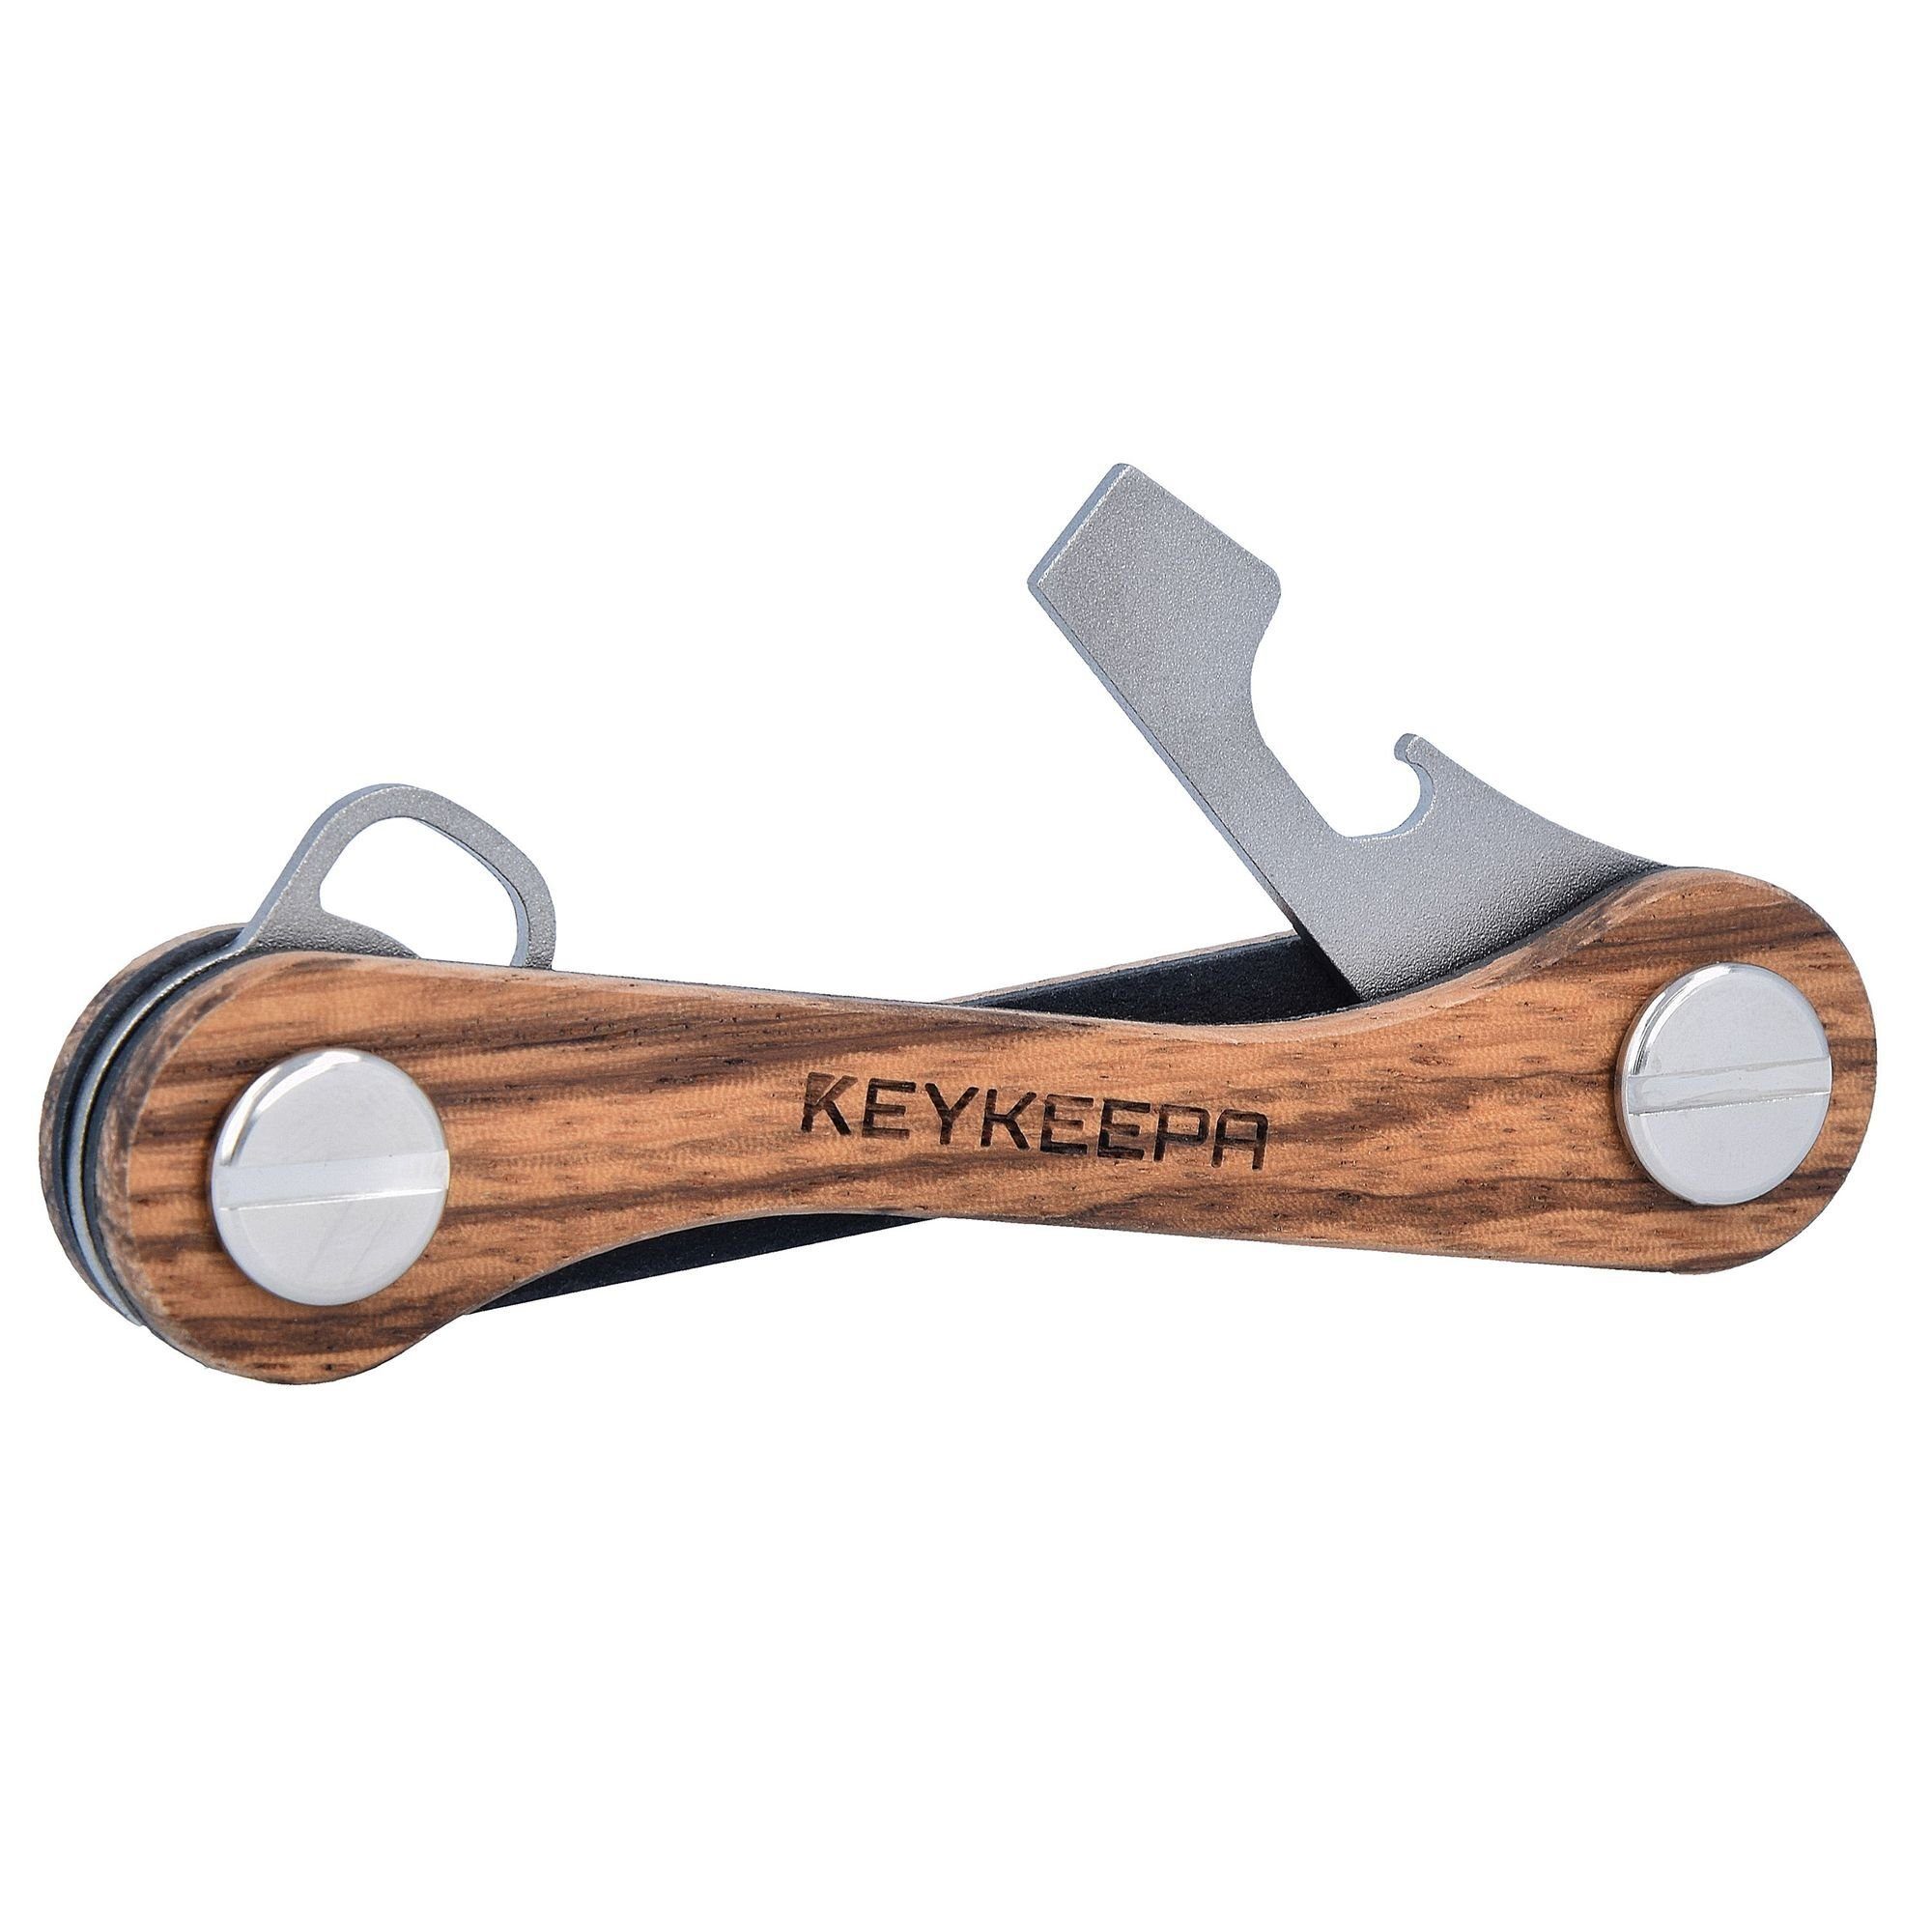 Keykeepa Schlüsseltasche zebrano Wood, Holz